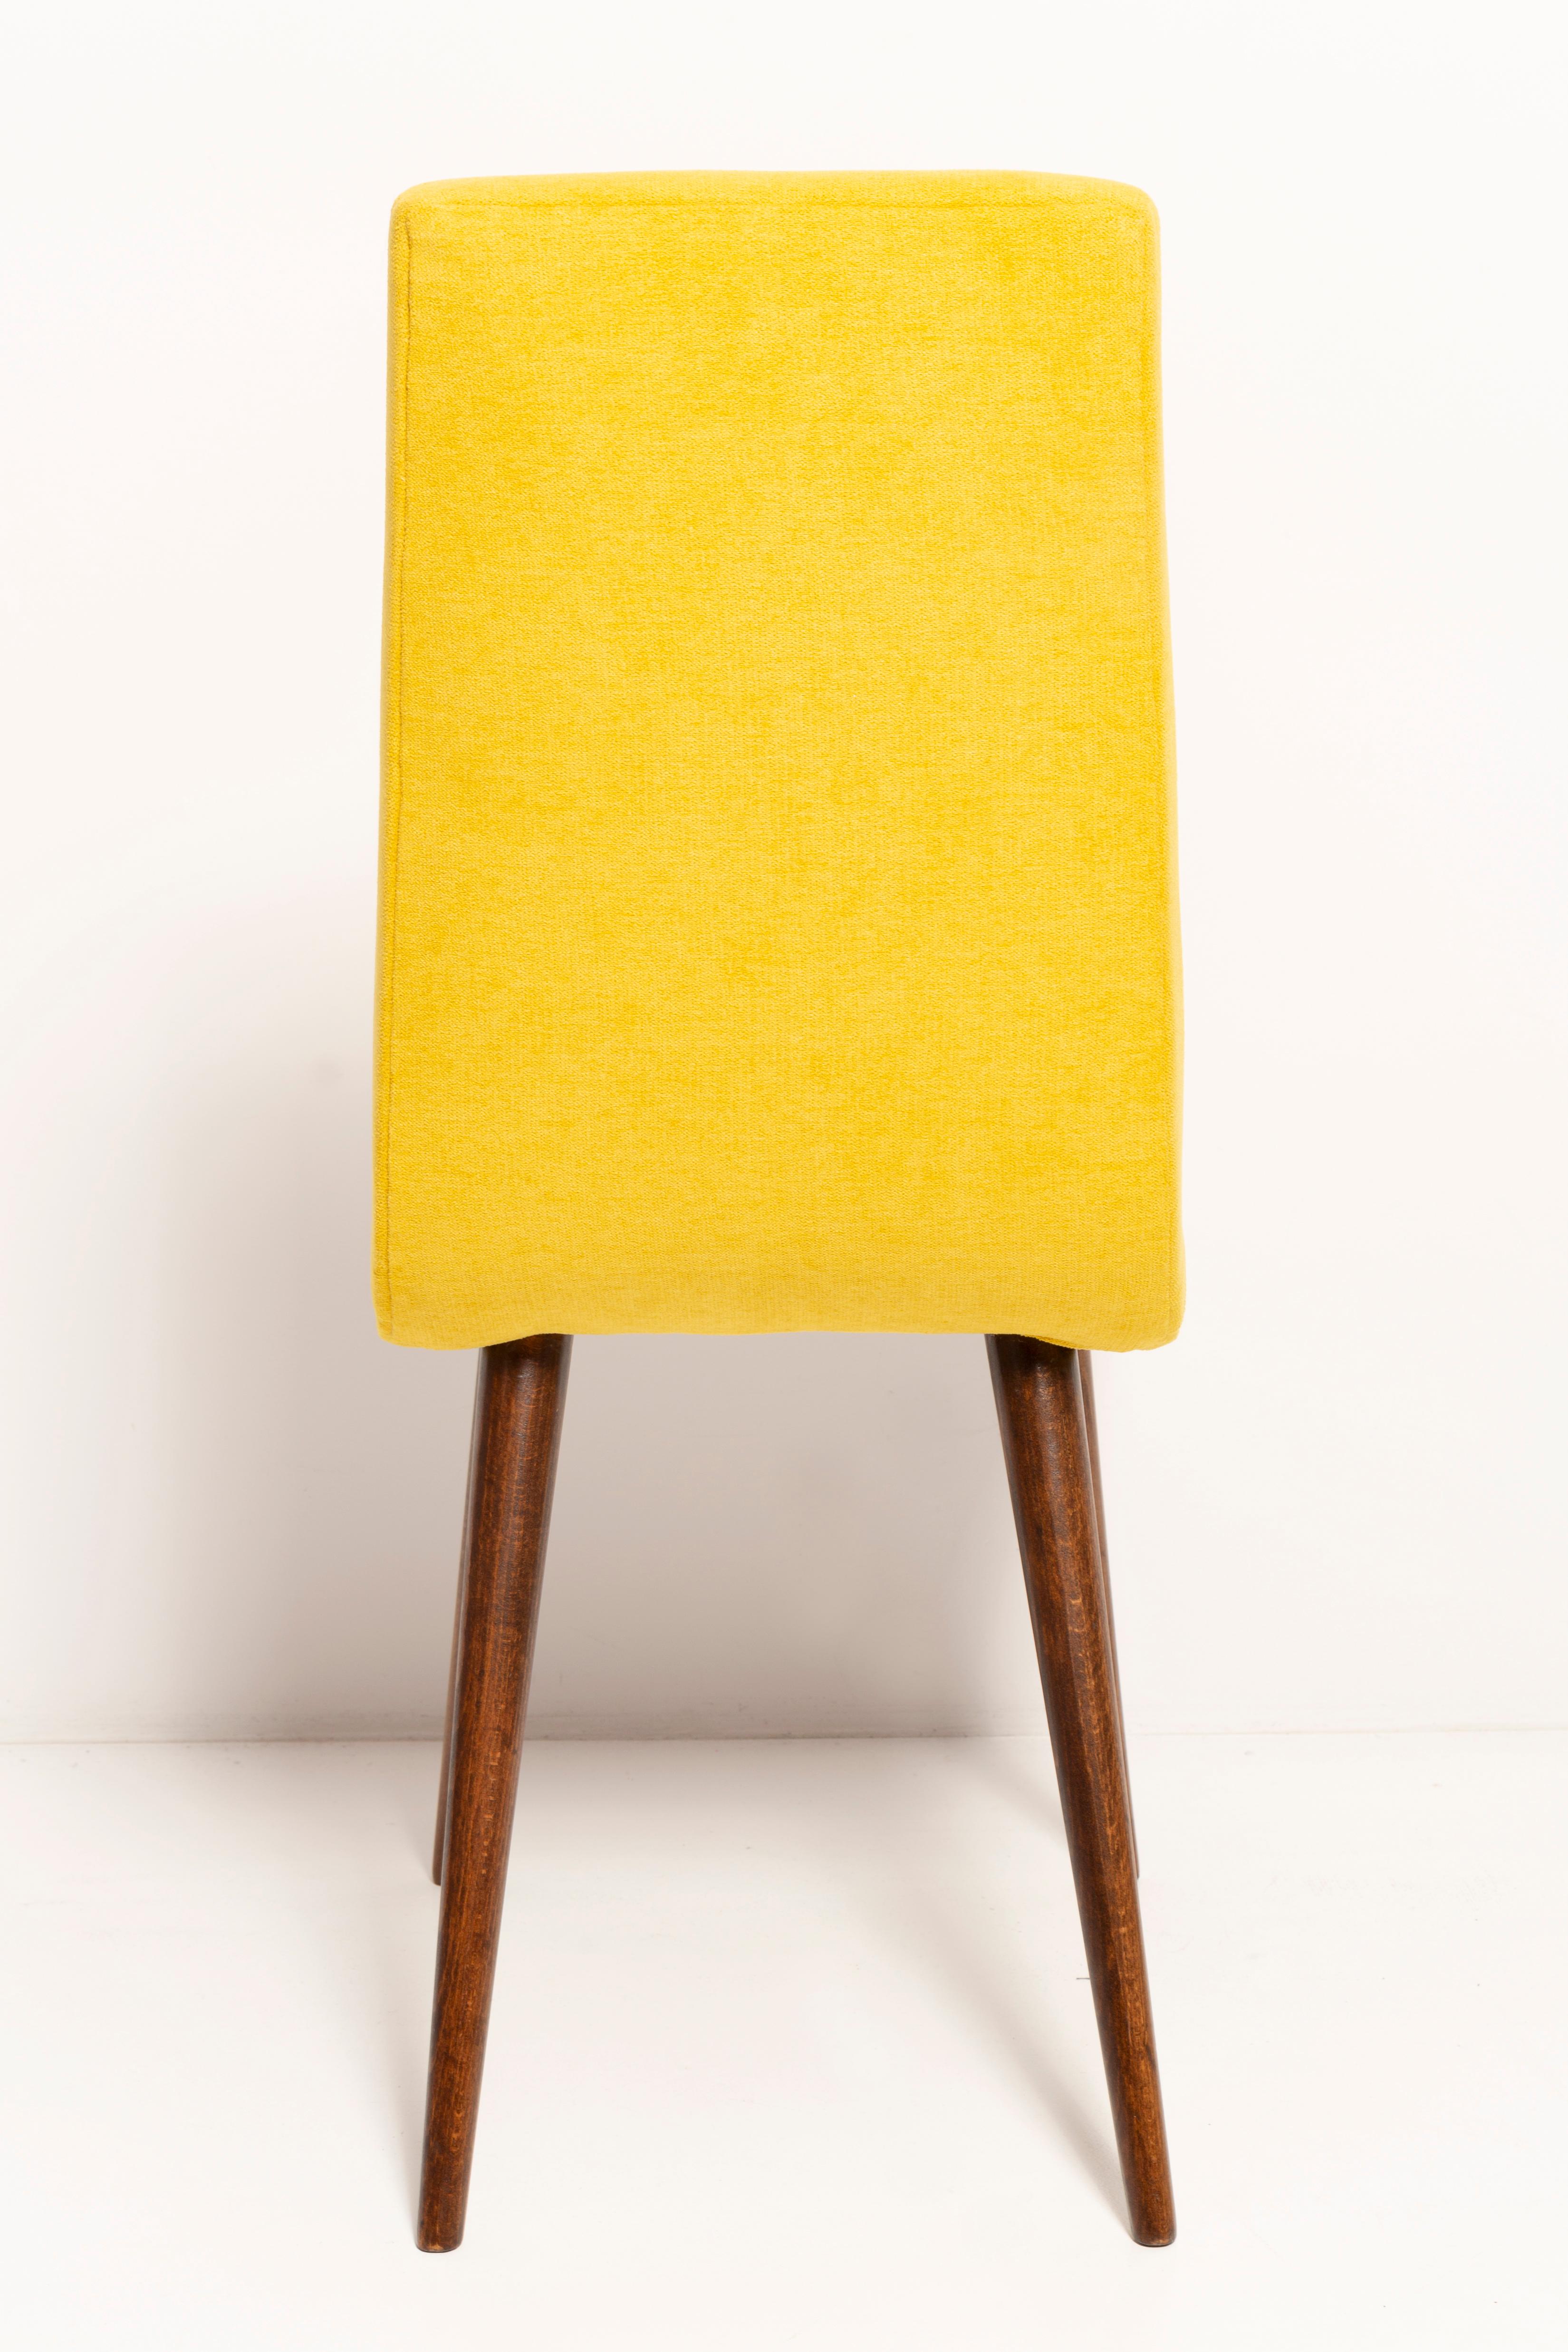 Textile 20th Century Mustard Yellow Wool Chair, Rajmund Halas, Europe, 1960s For Sale